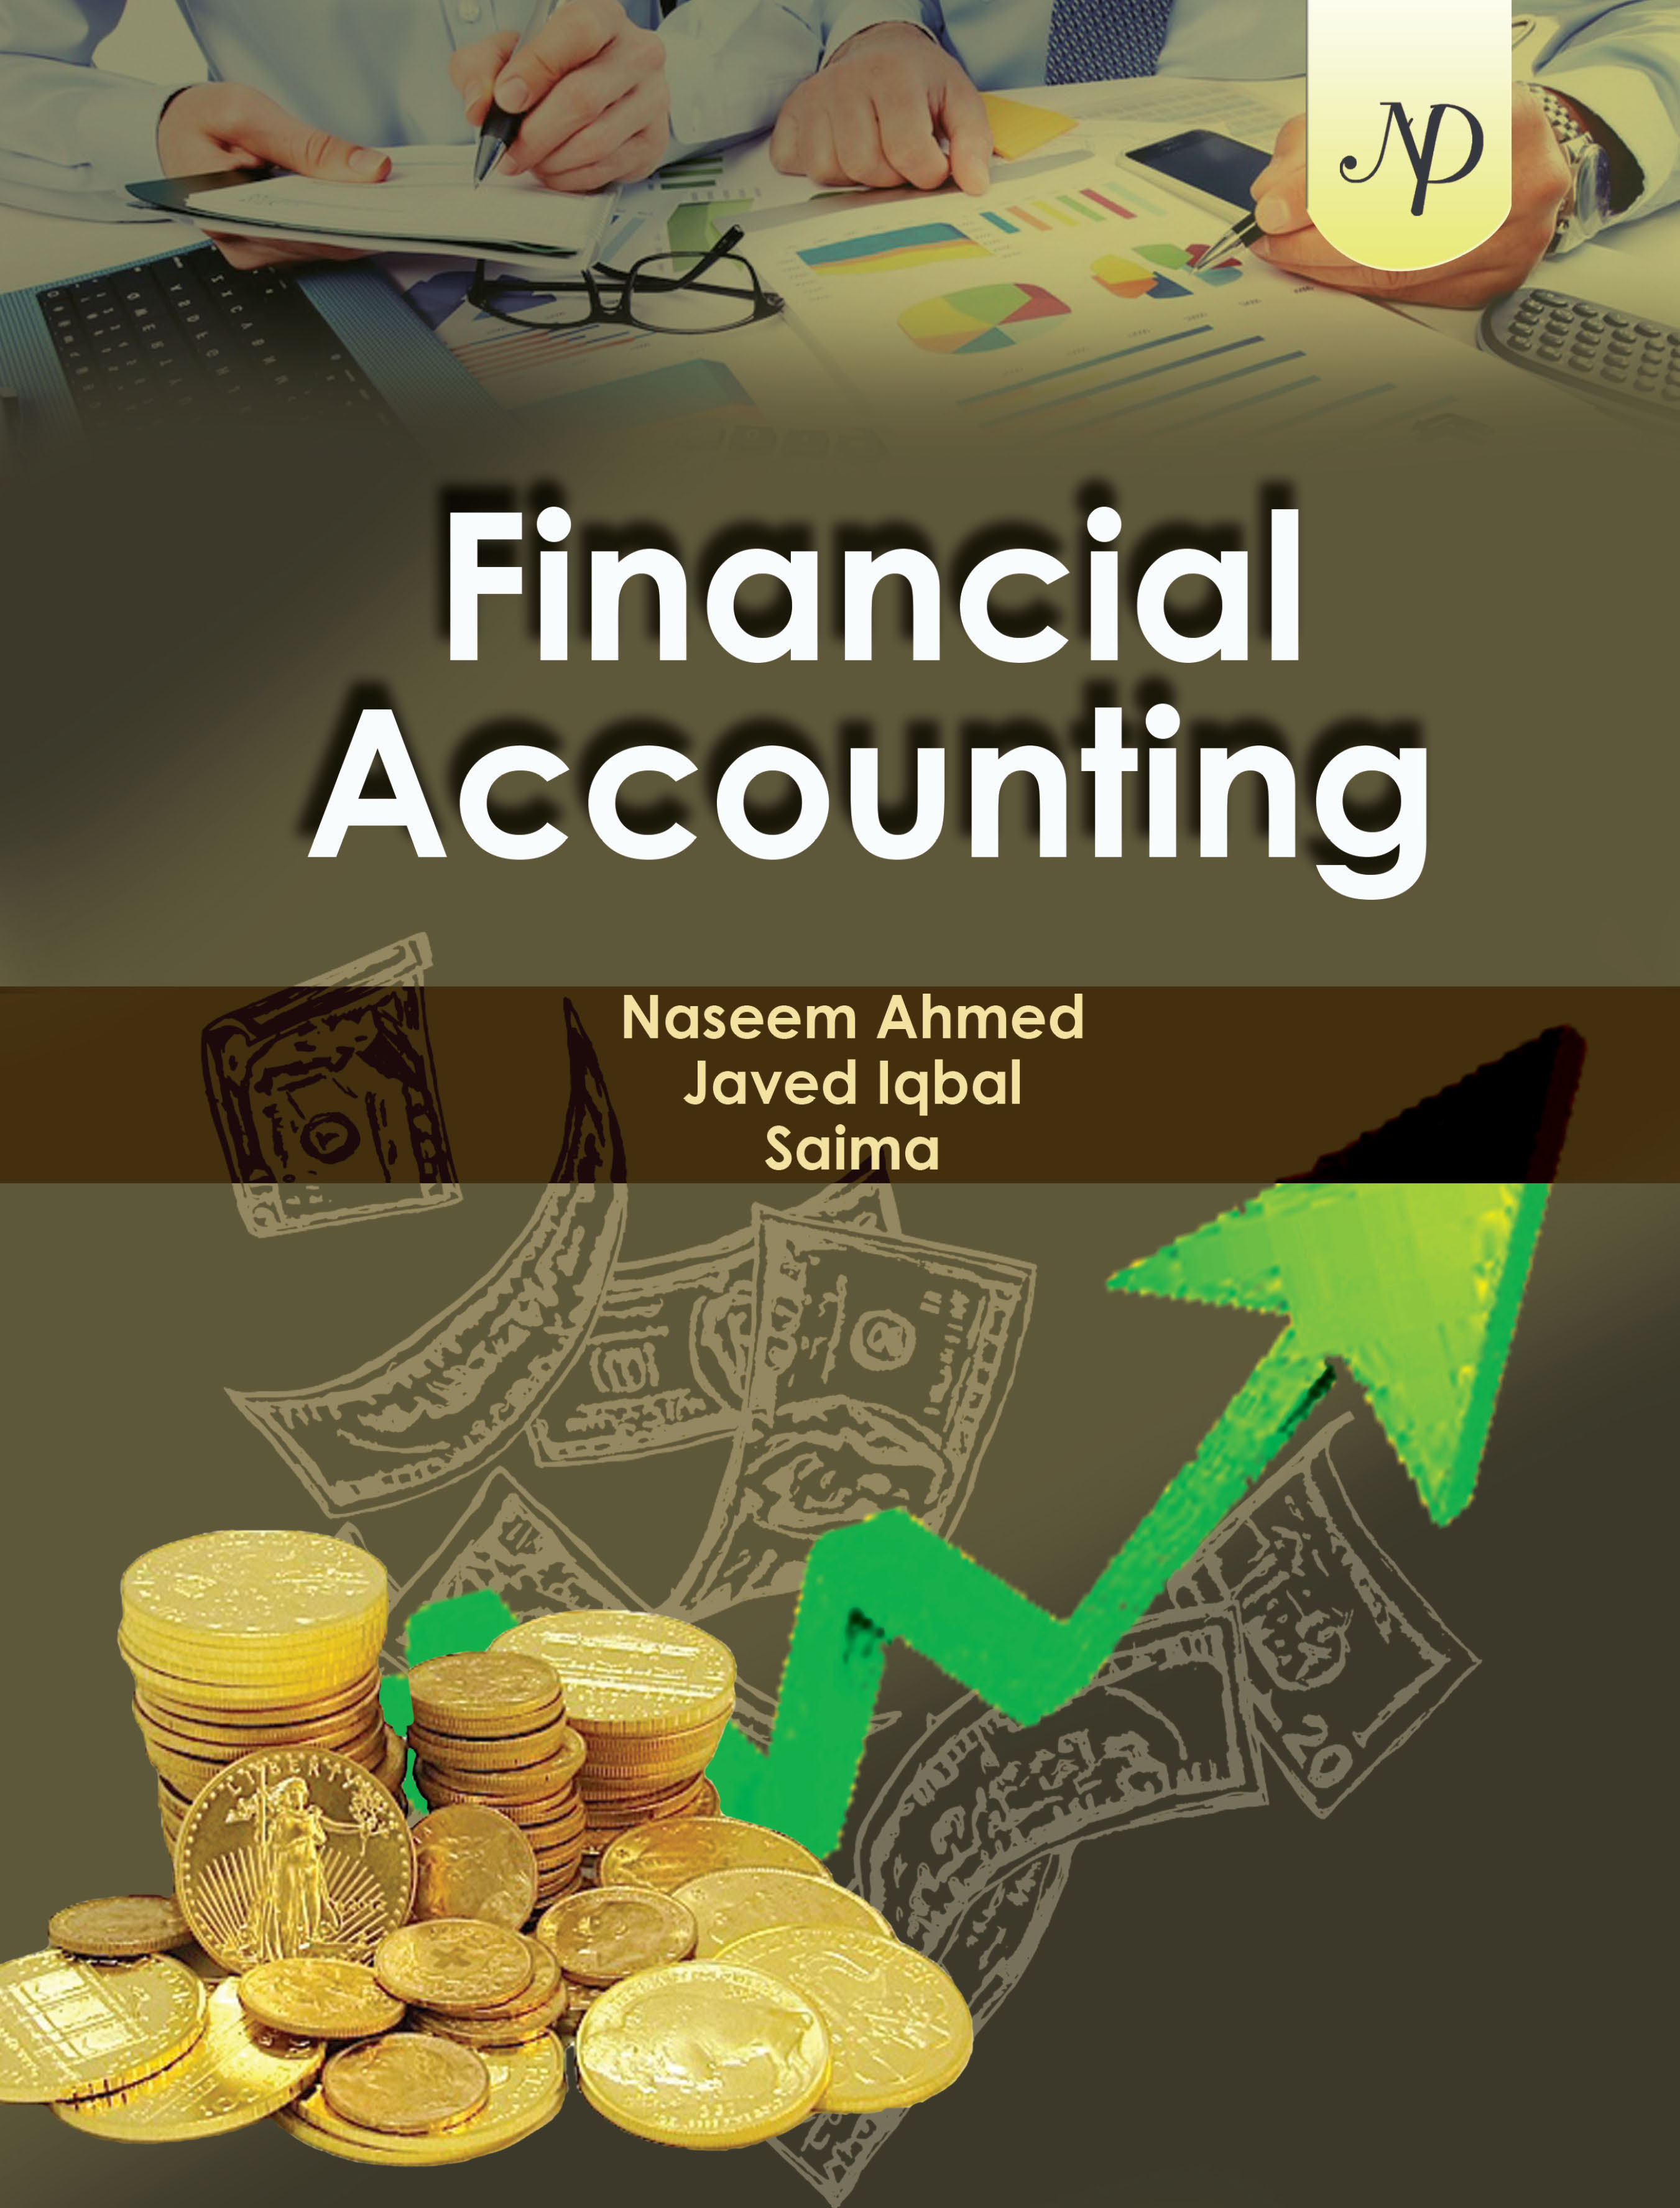 Financial Accounting Cover final.jpg